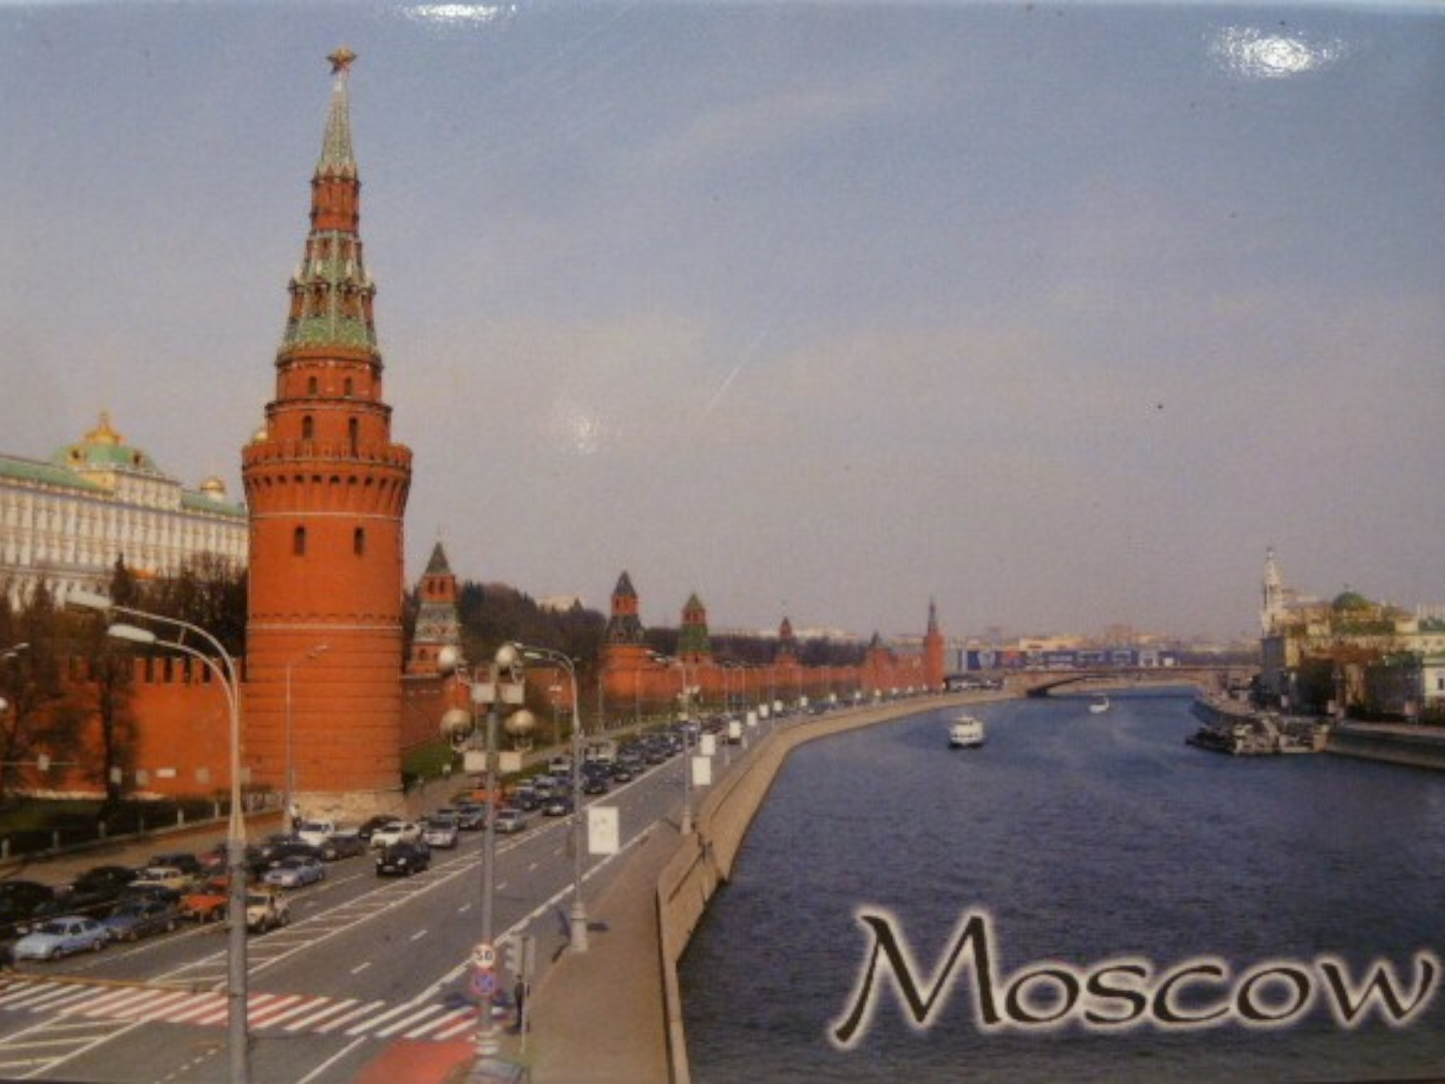 Moscow Russia Fridge Collector's Souvenir Magnet 2.5" X 3.5"